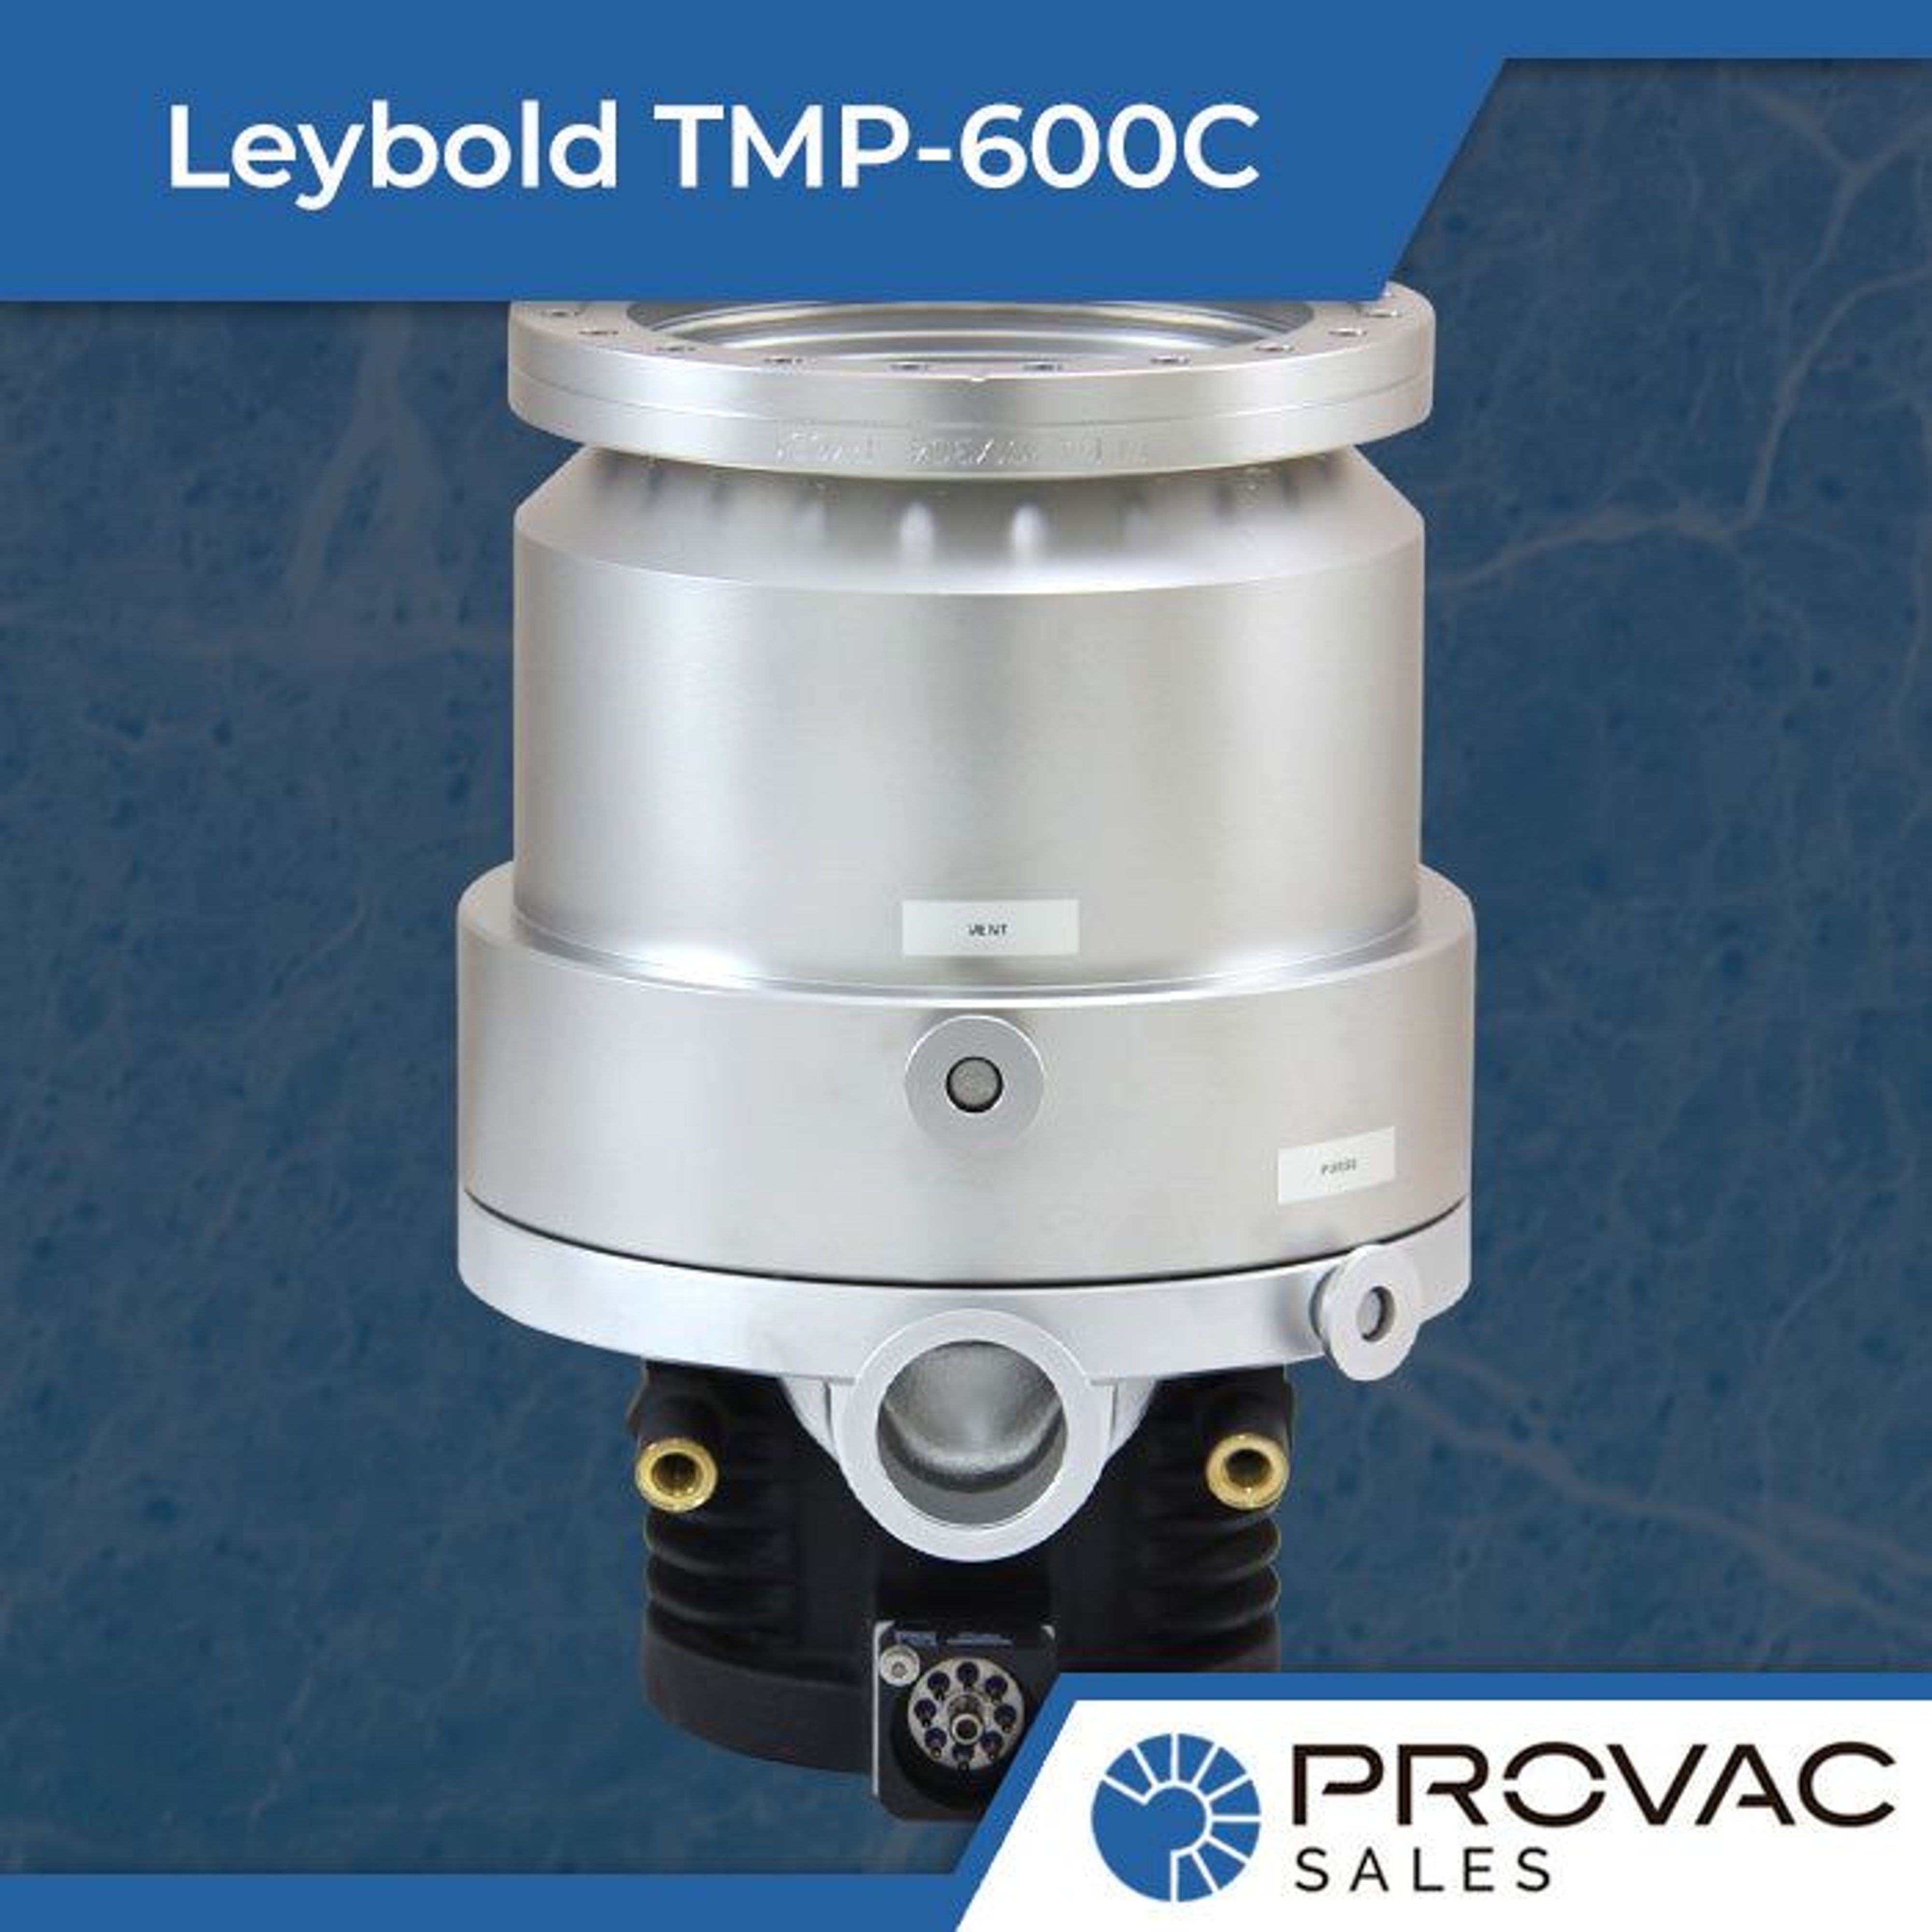 Leybold TMP-600C Turbomolecular Pump Background